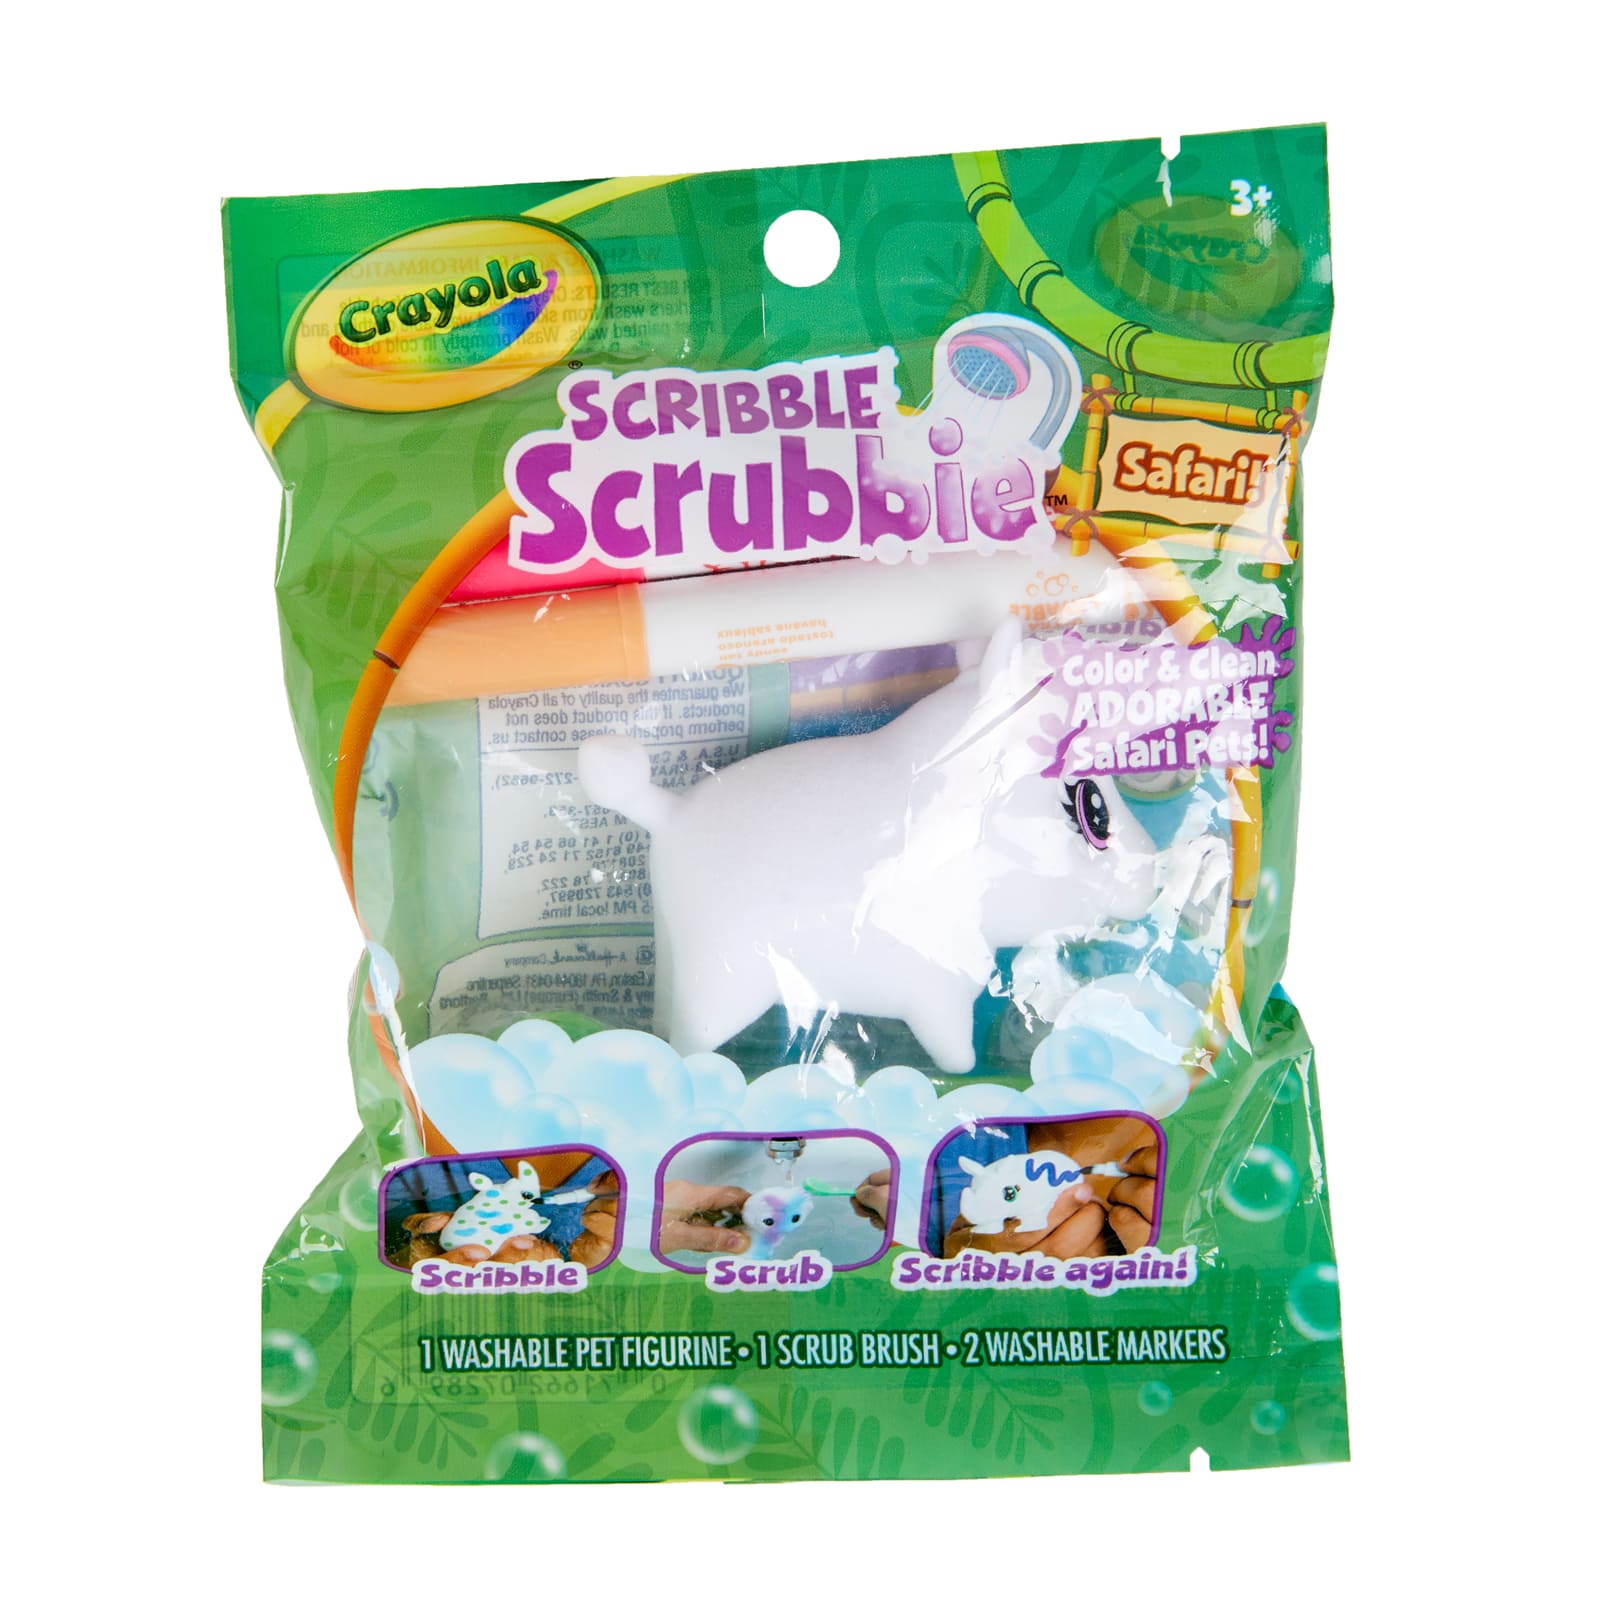 Crayola Scribble Scrubbie Safari Oasis Set, 12 pc - Harris Teeter